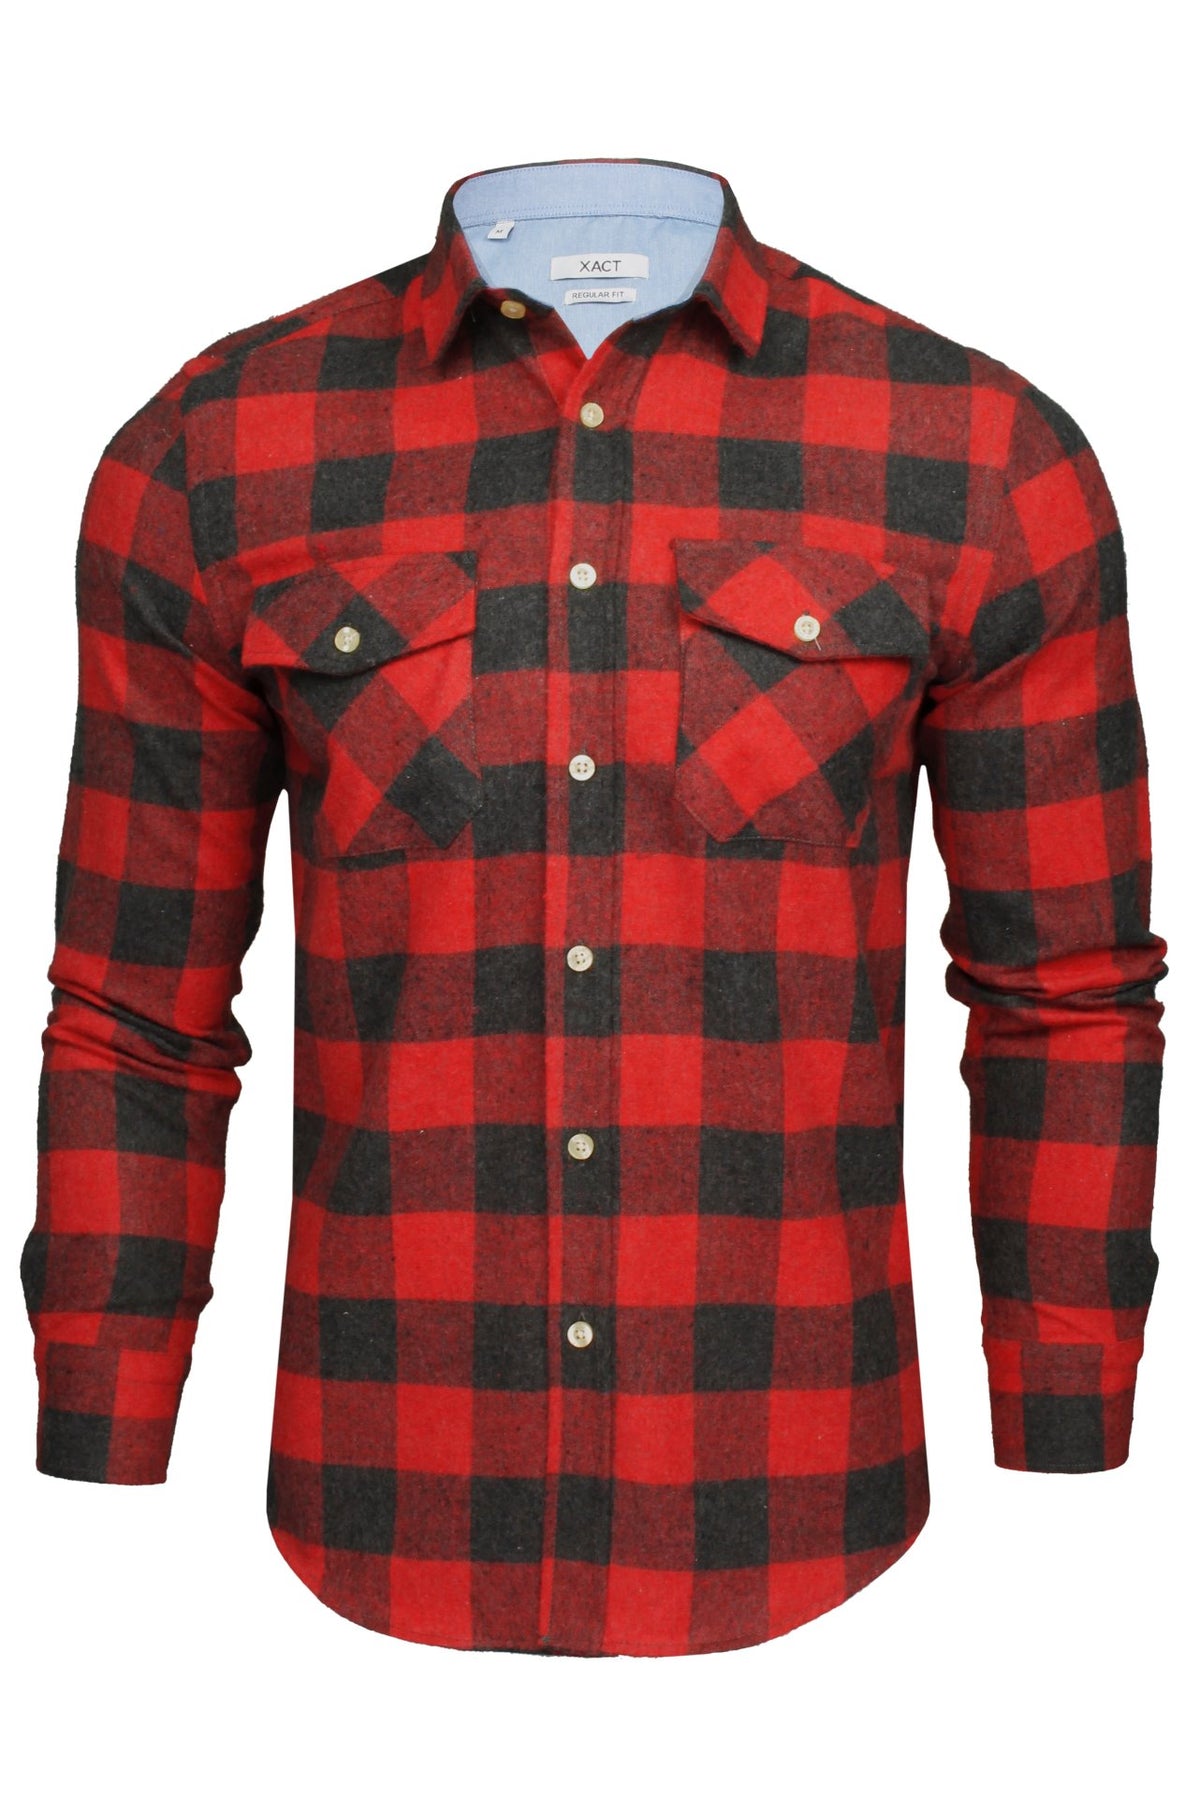 Xact Mens Soft Flannel Buffalo Check Shirt - Long Sleeved, 01, Xsh1136, Jack - Red/ Dark Grey